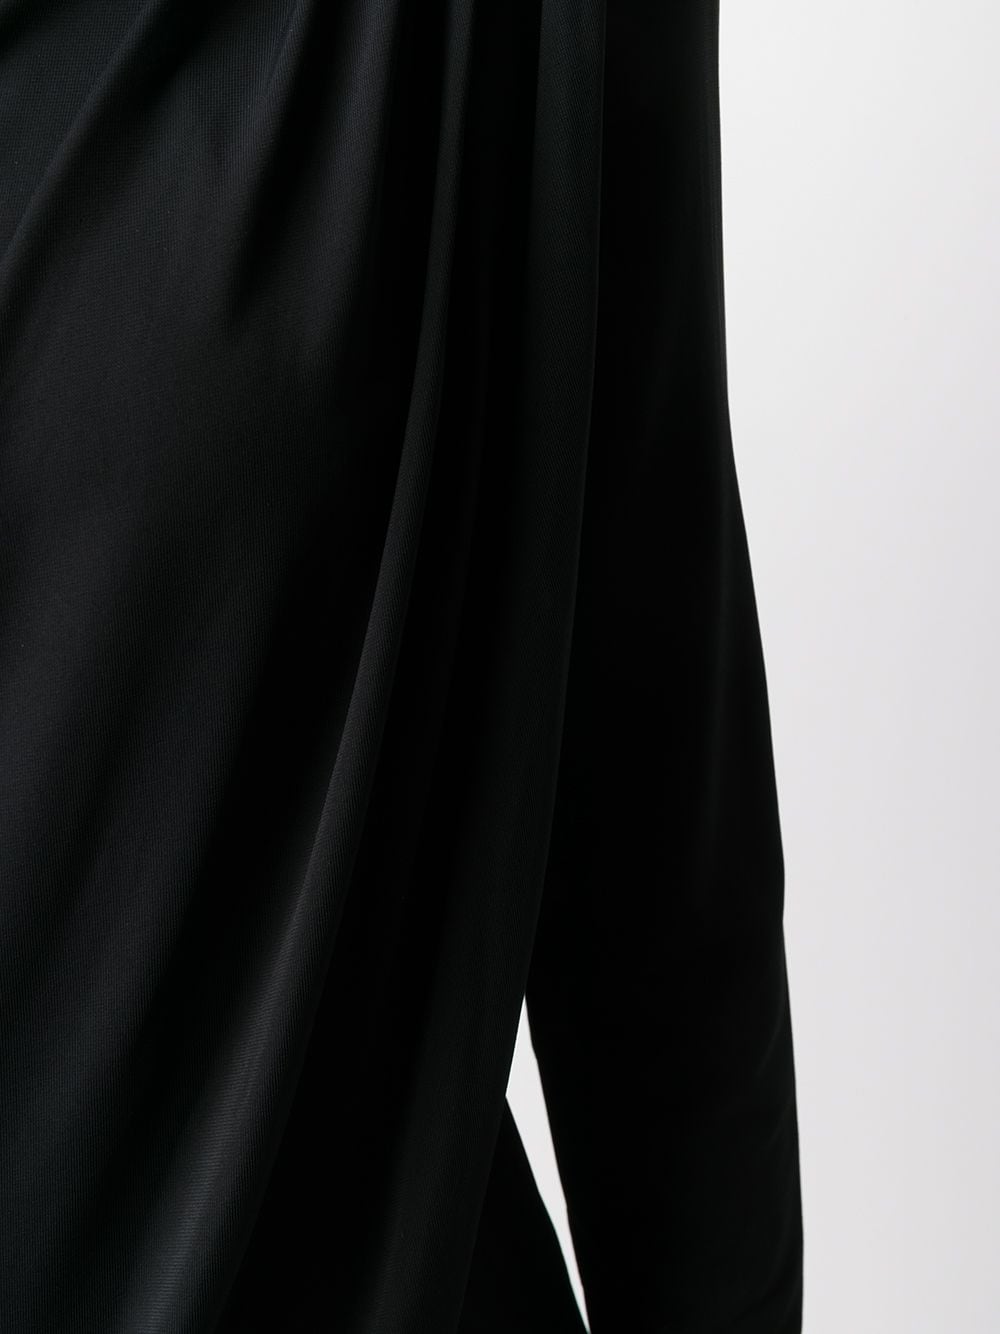 Moschino frame-buckle Draped Jersey Dress - Farfetch